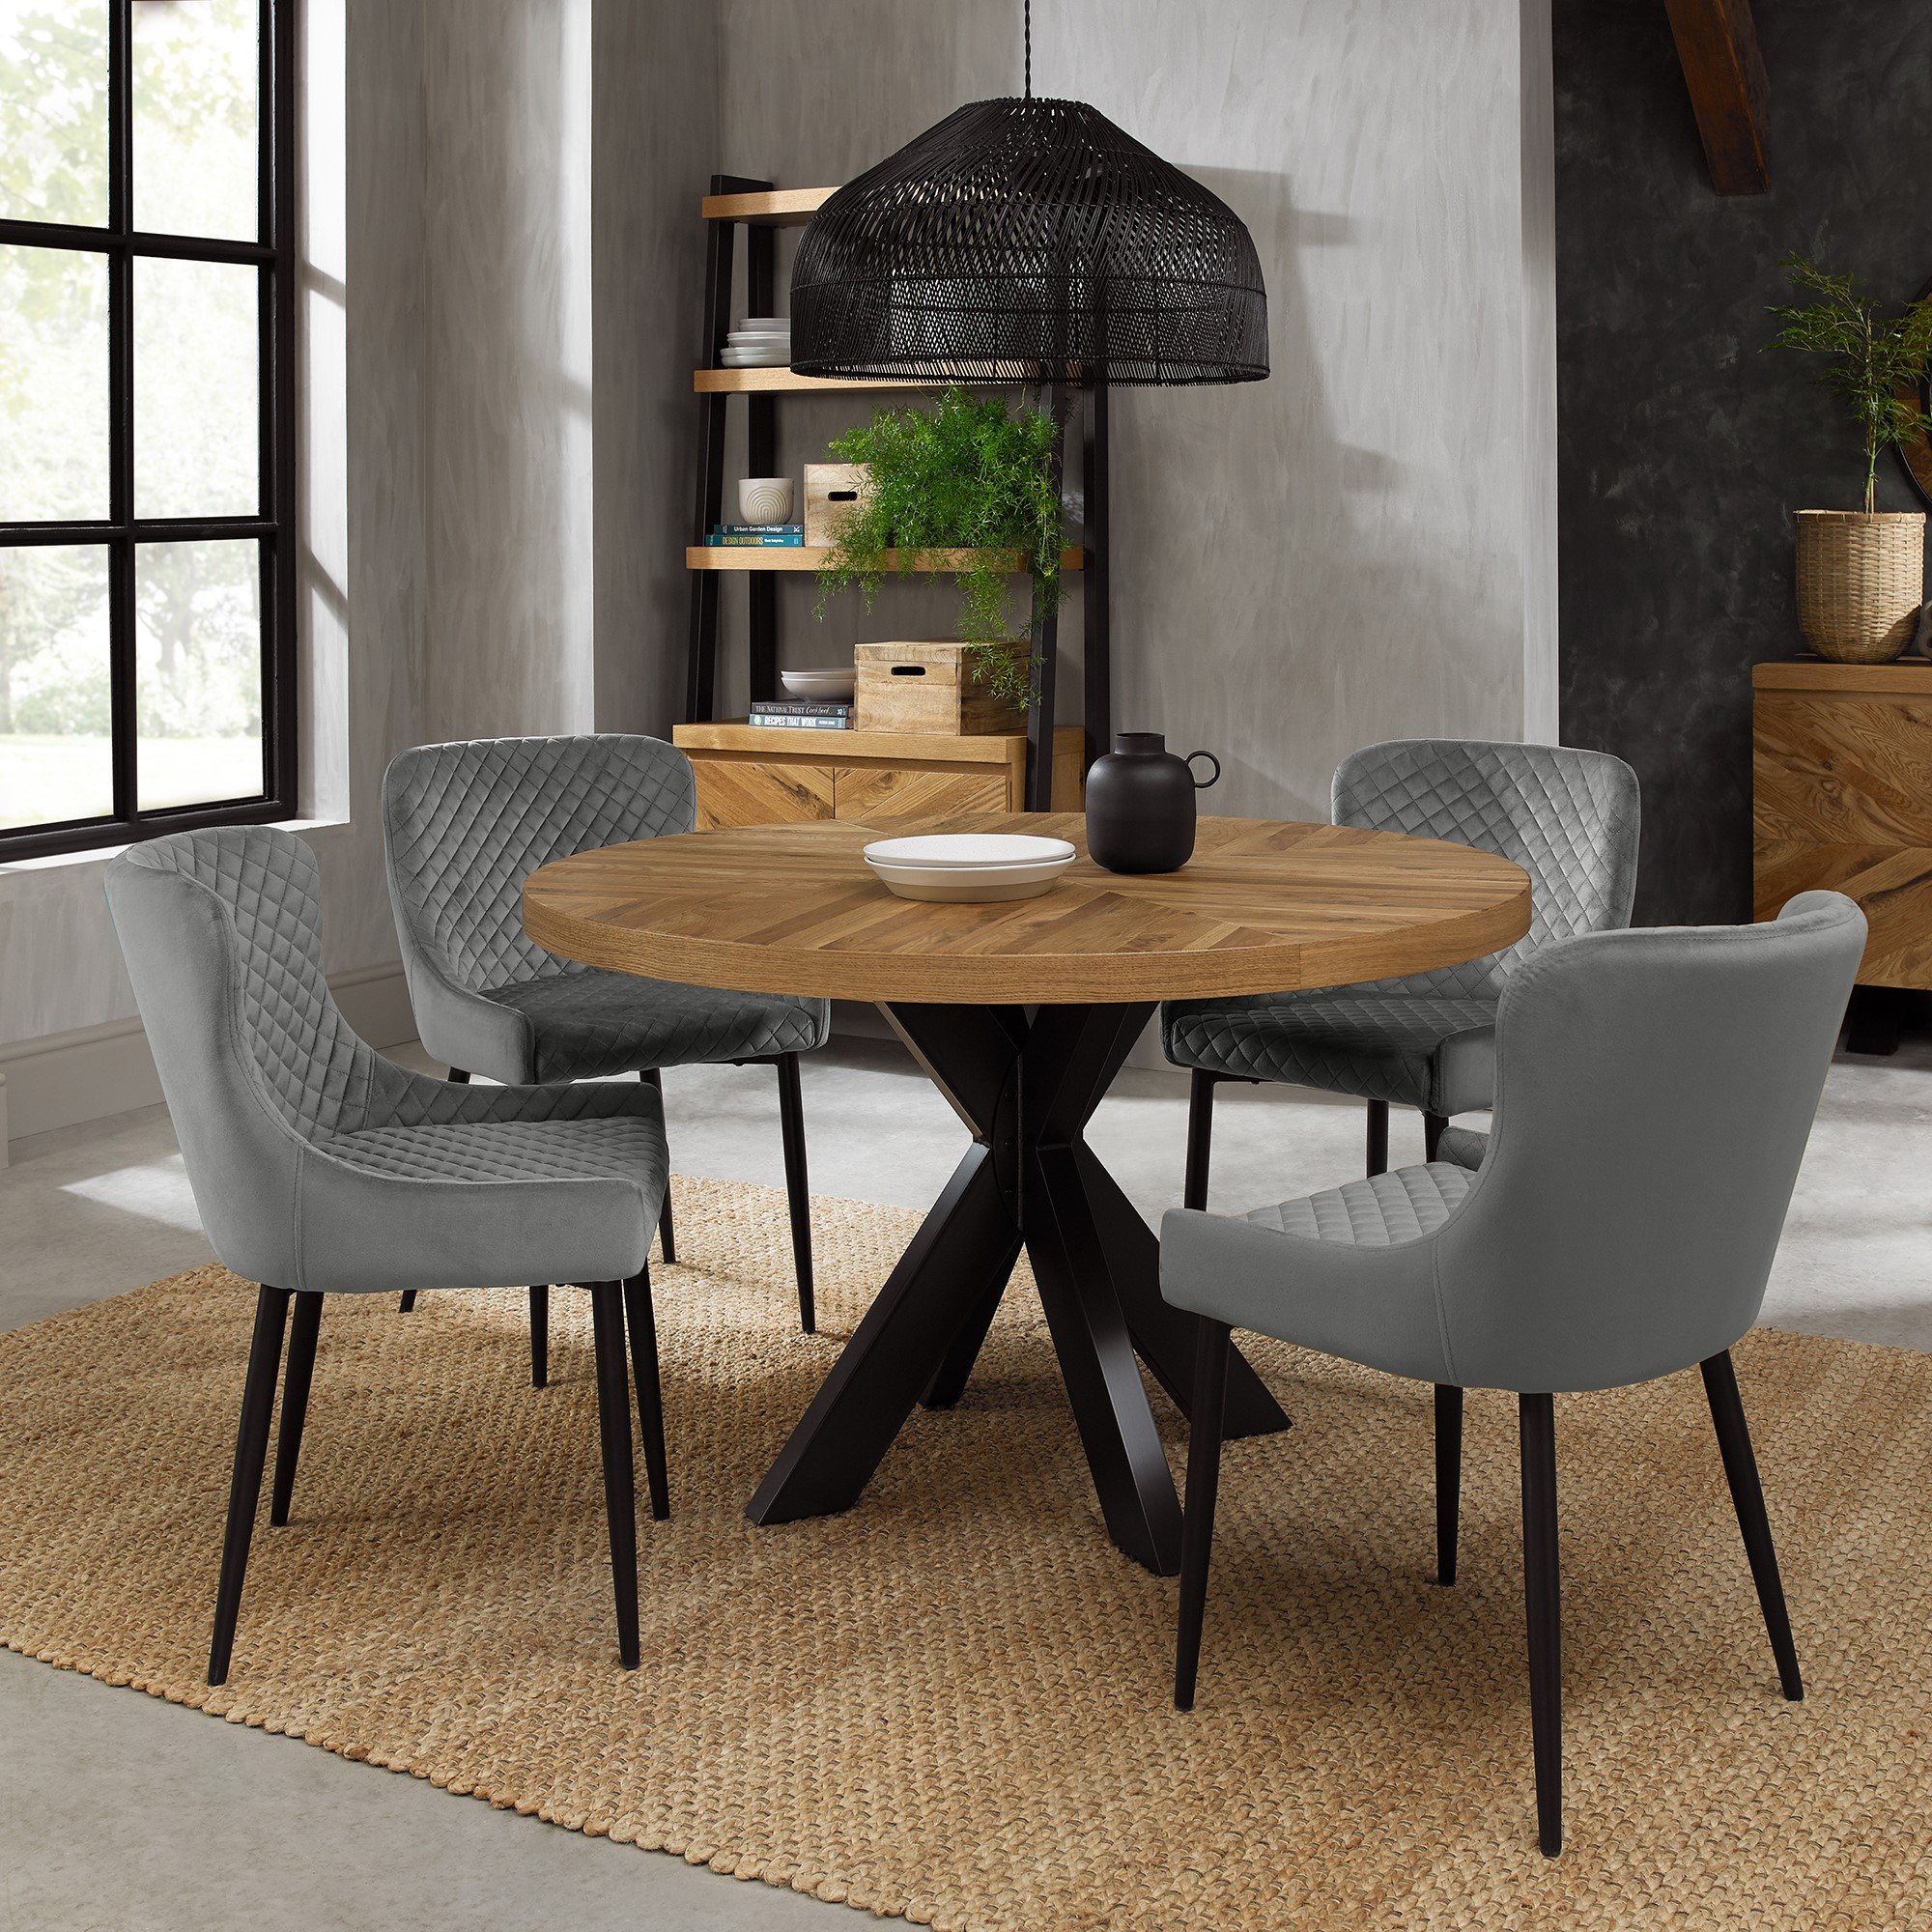 Home Origins Bosco Rustic Oak 4 Seat Circular Dining Table- feature